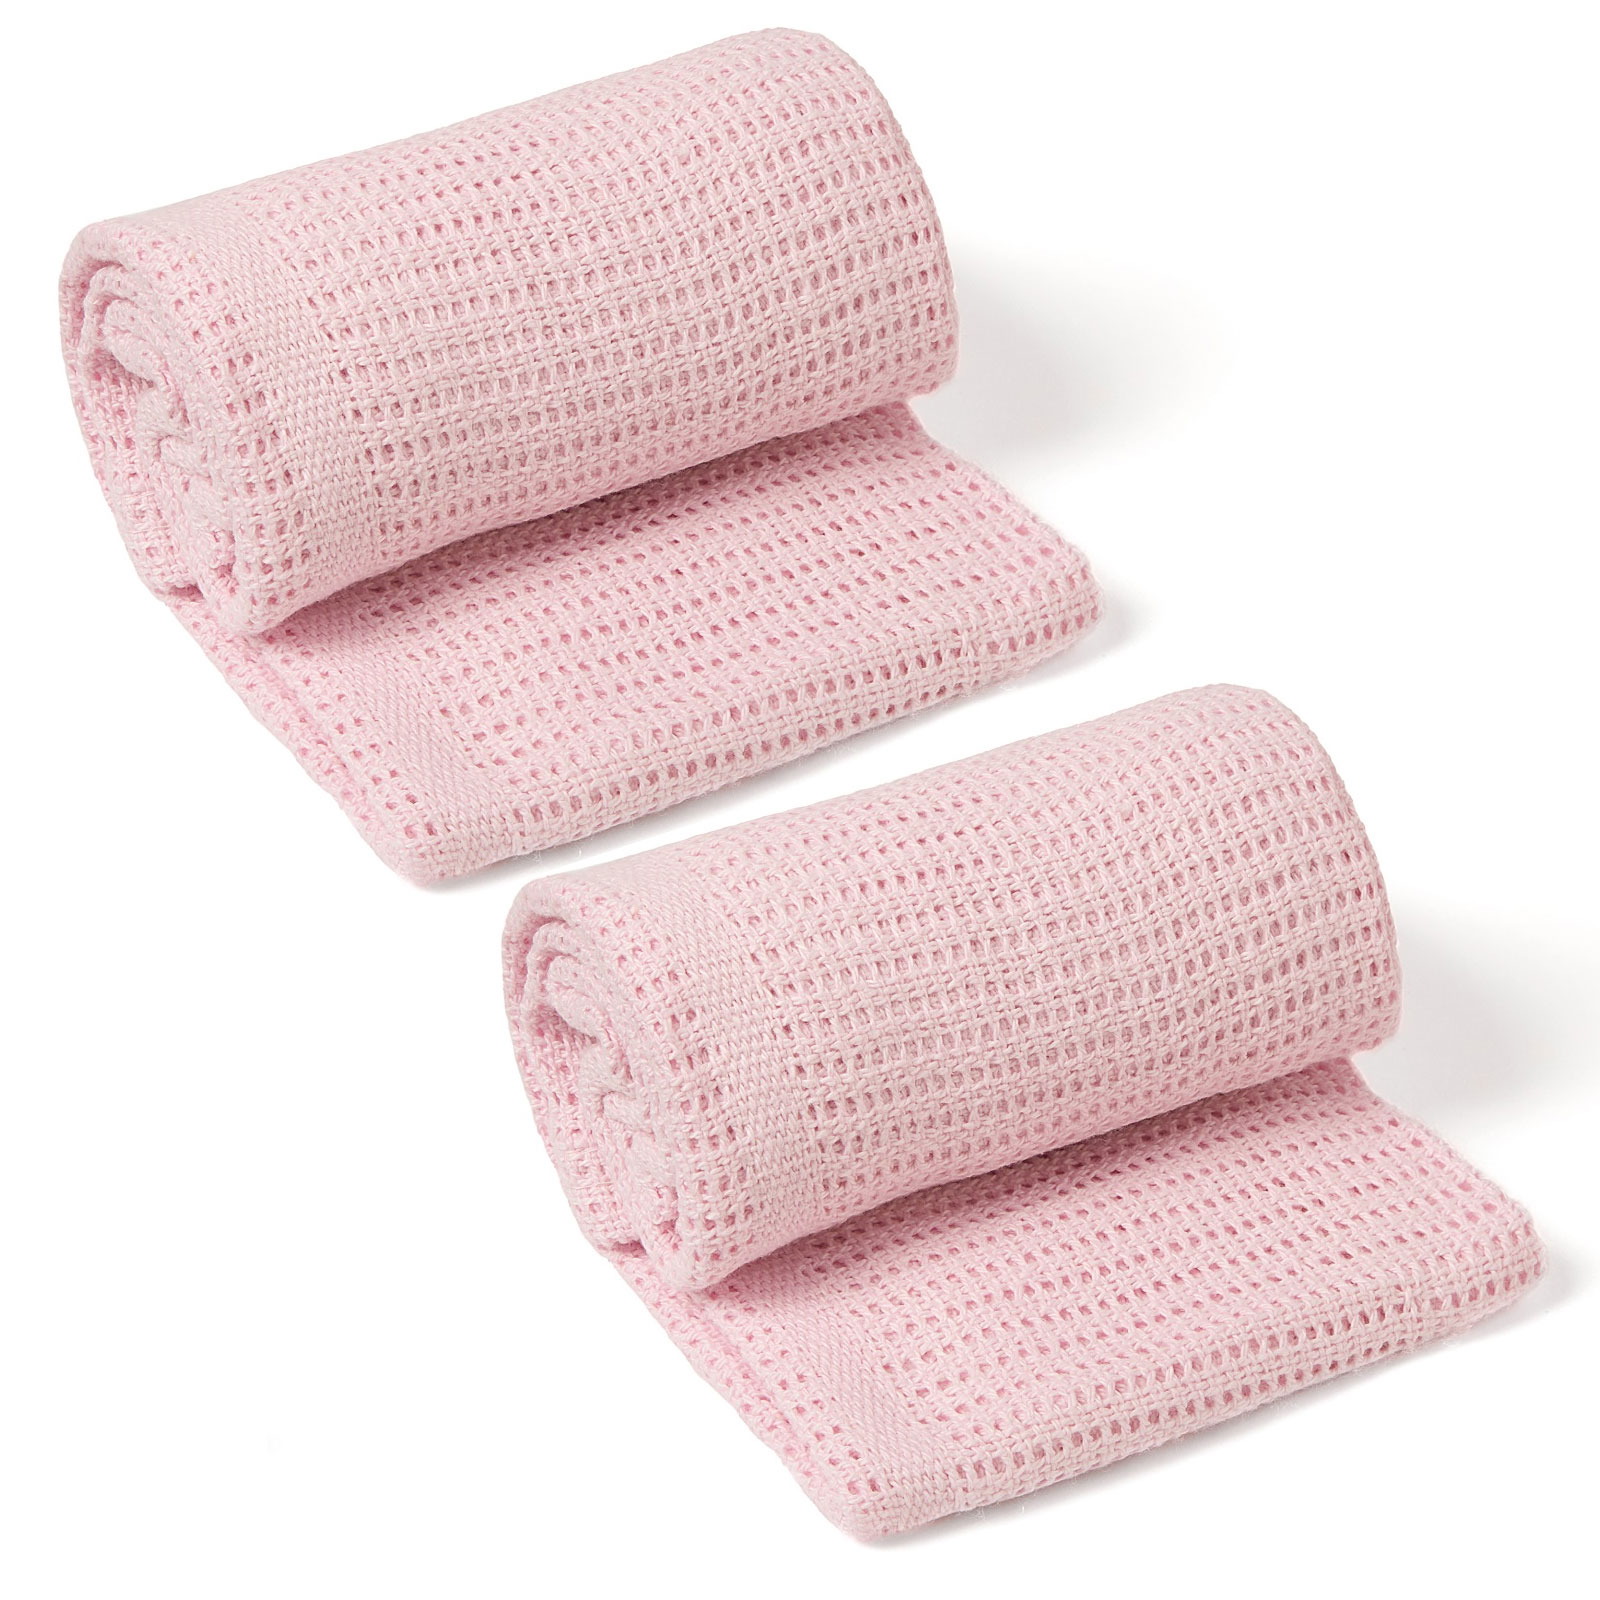 Soft Cotton Pram/Moses Basket/Crib Cellular Blanket (2 Pack) - Pink